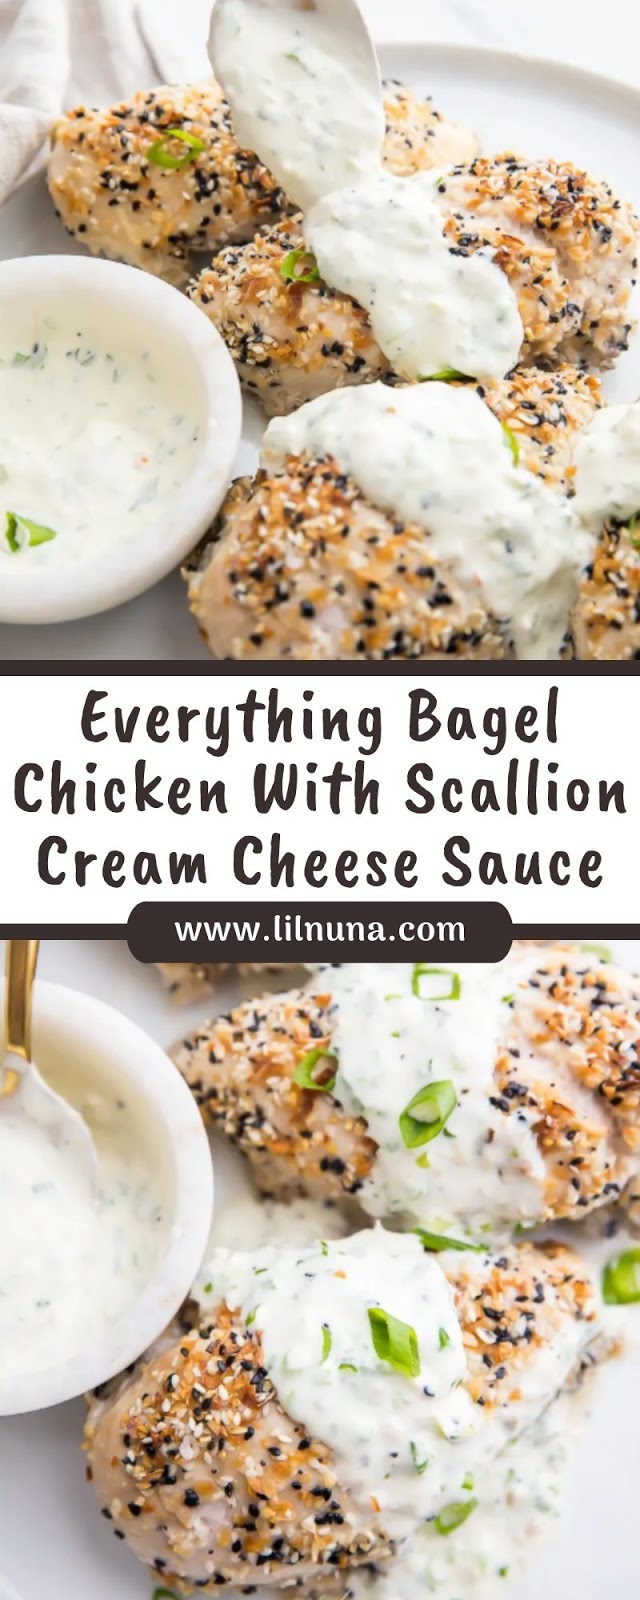 Everything Bagel Chicken With Scallion Cream Cheese Sauce